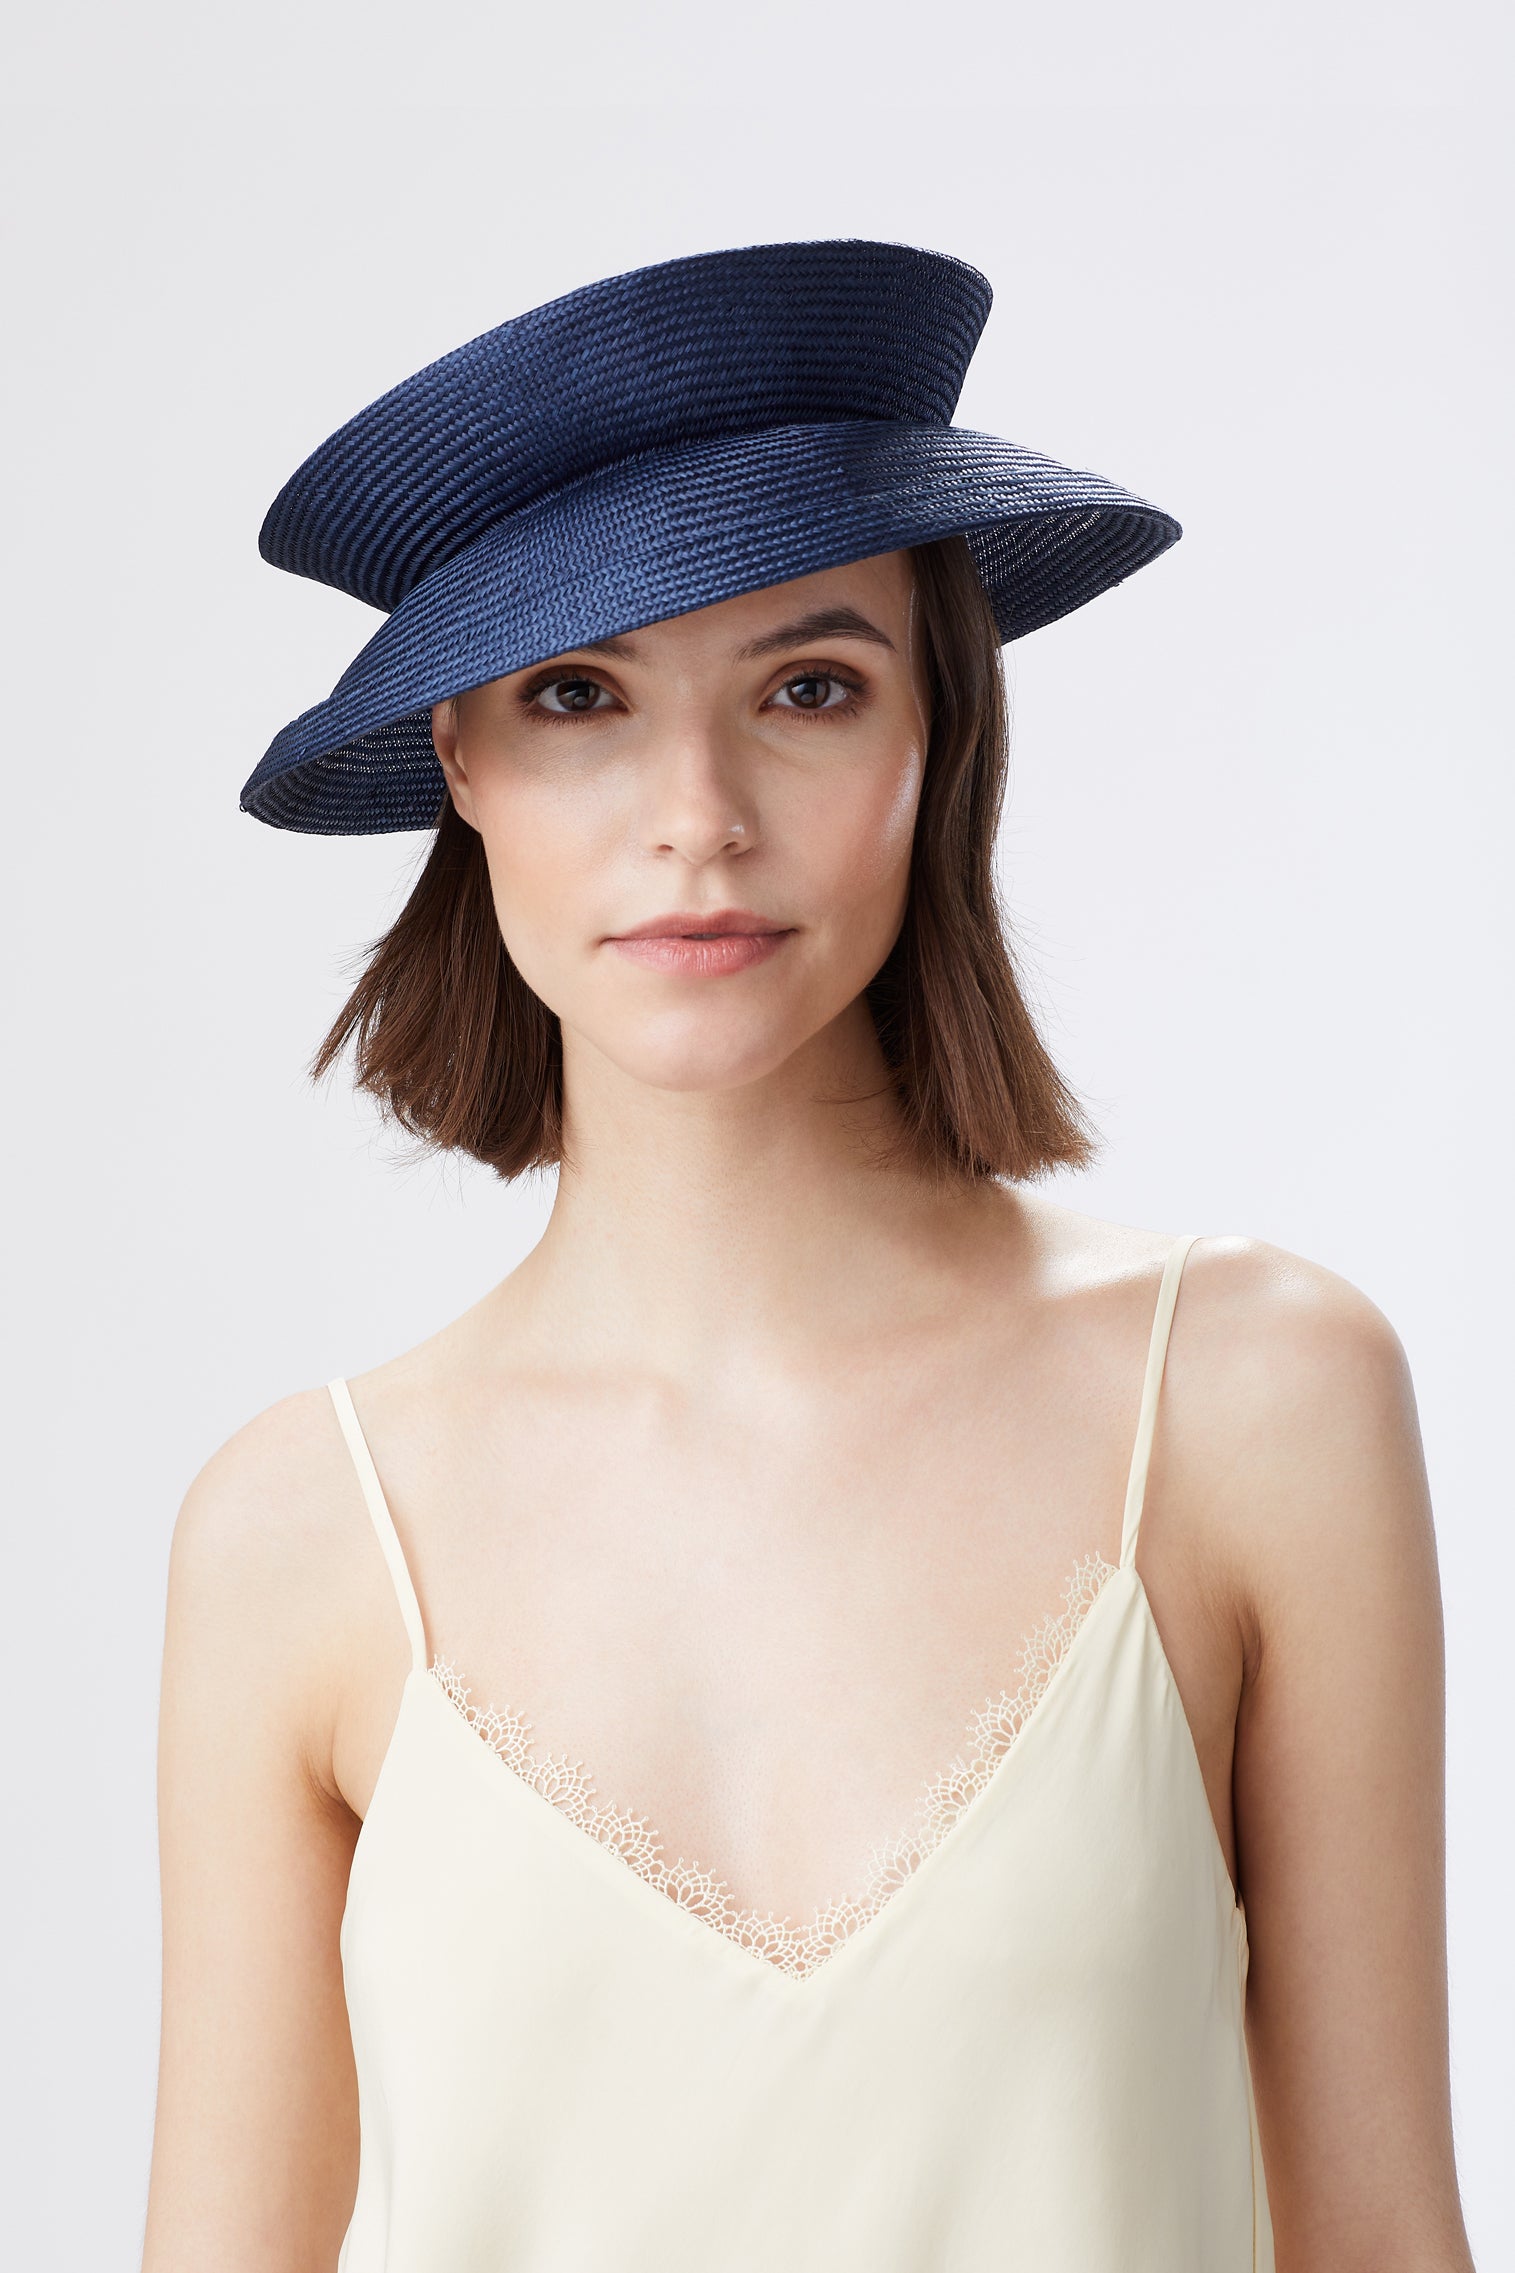 Pack'n'Go Collapsible Sun Hat - Women’s Hats - Lock & Co. Hatters London UK